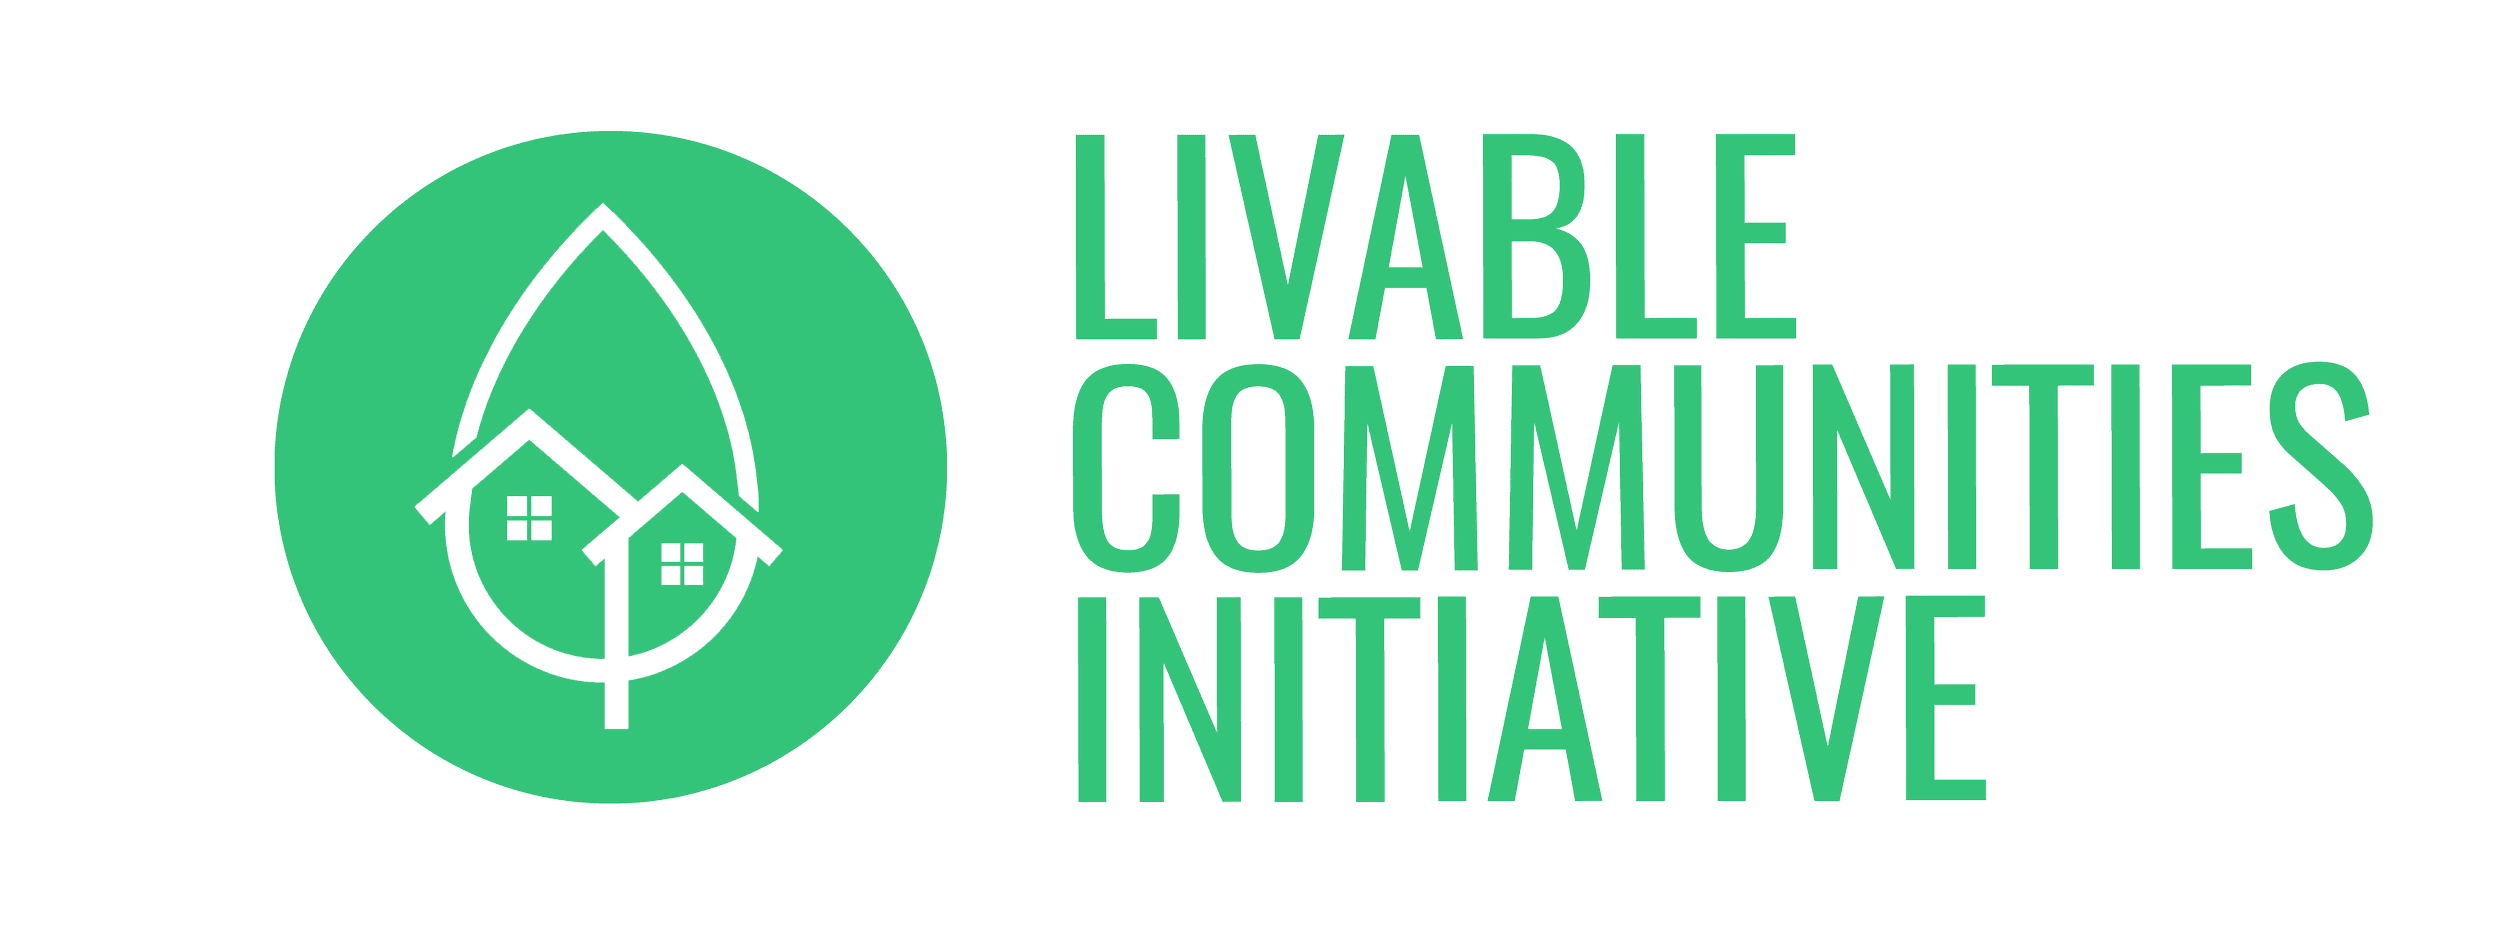 Livable Communities Initiative logo